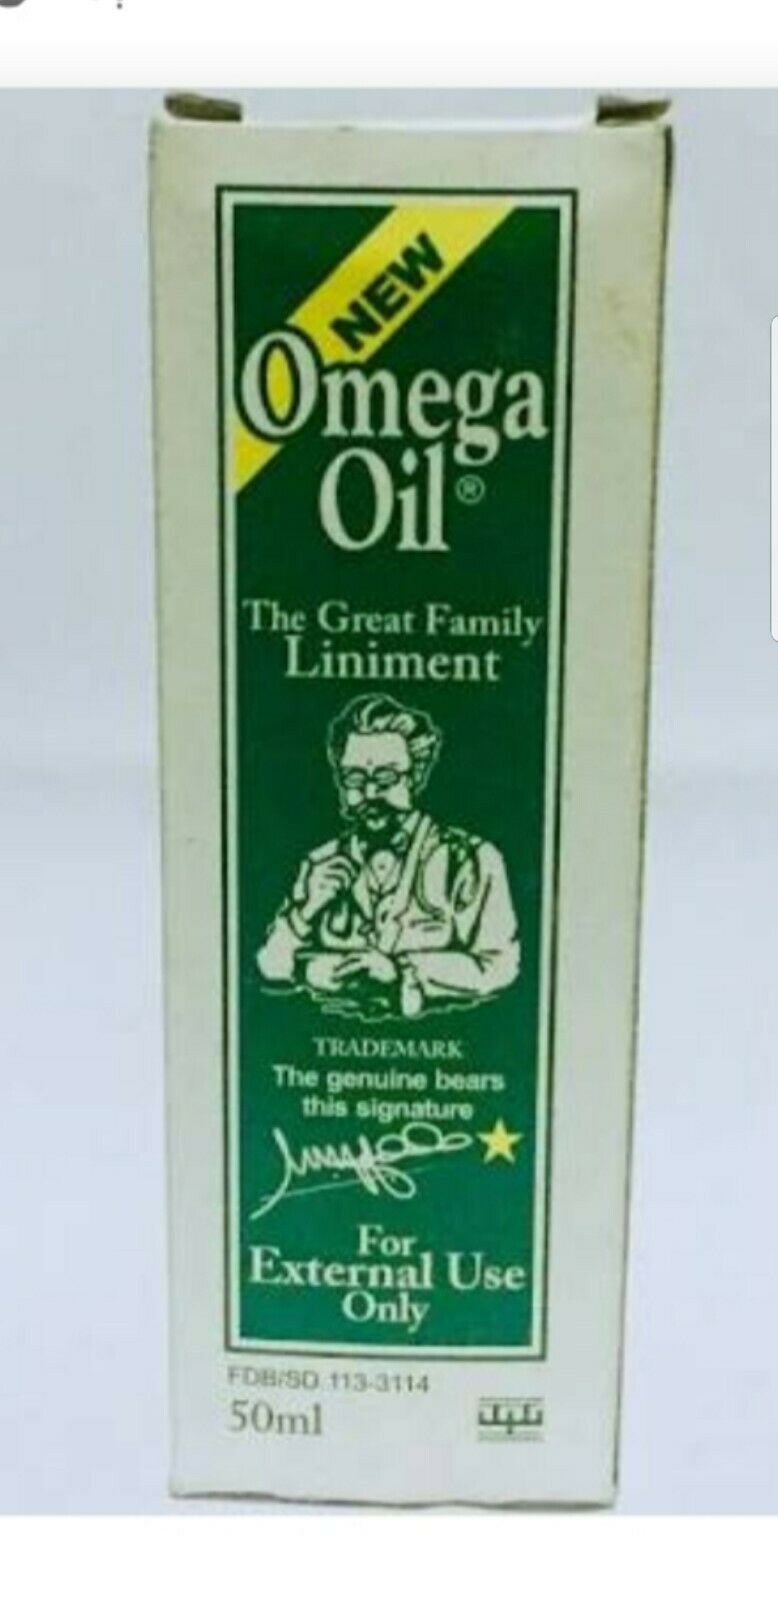 New Omega Oil Liniment